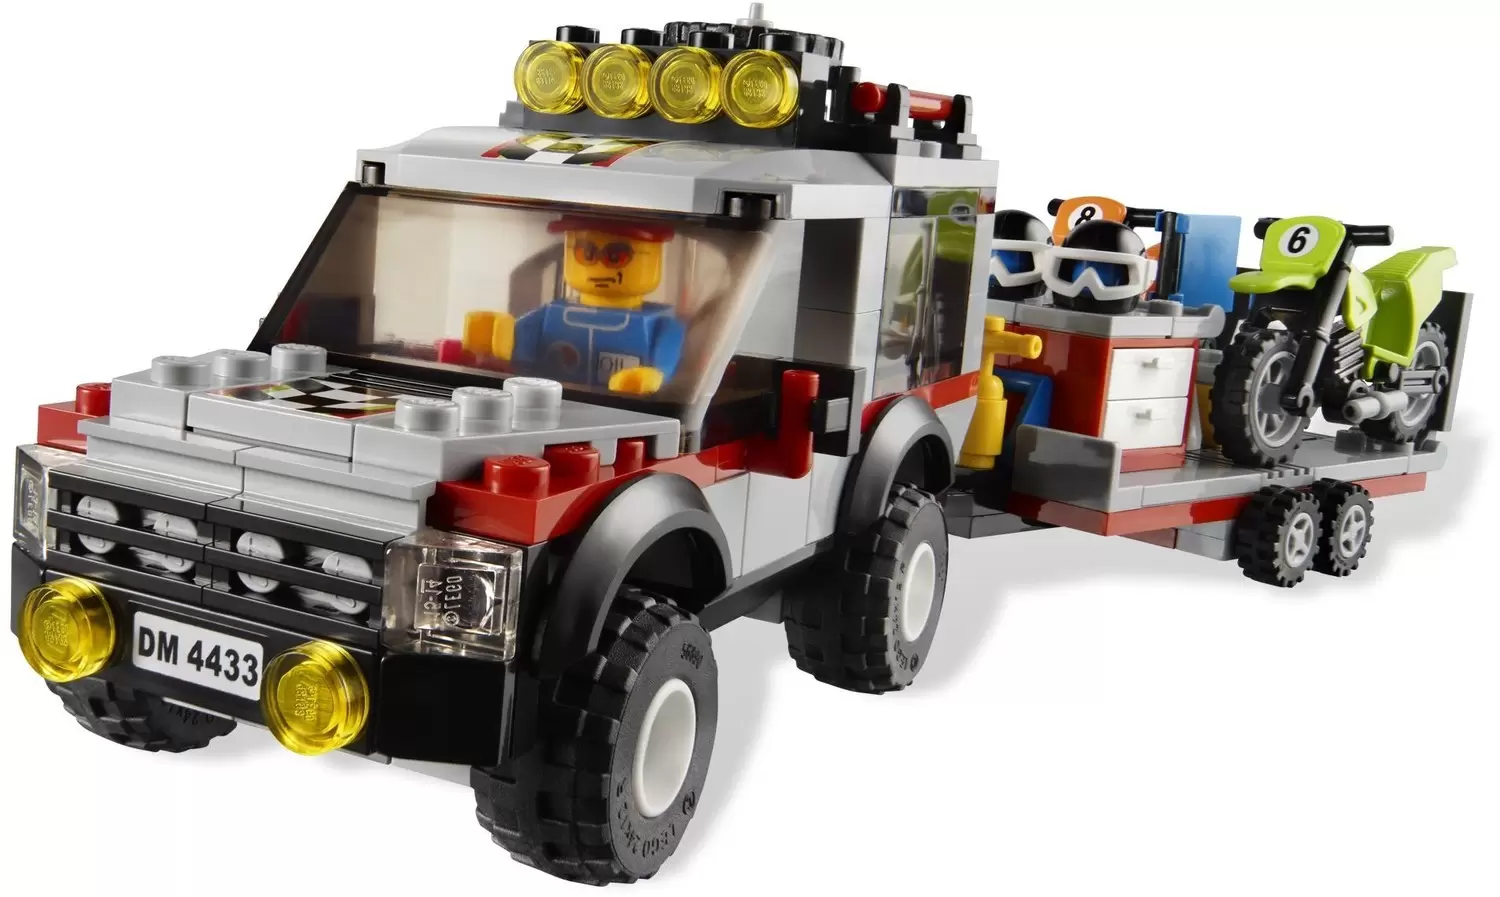 LEGO CITY - Dirt Bike Transporter